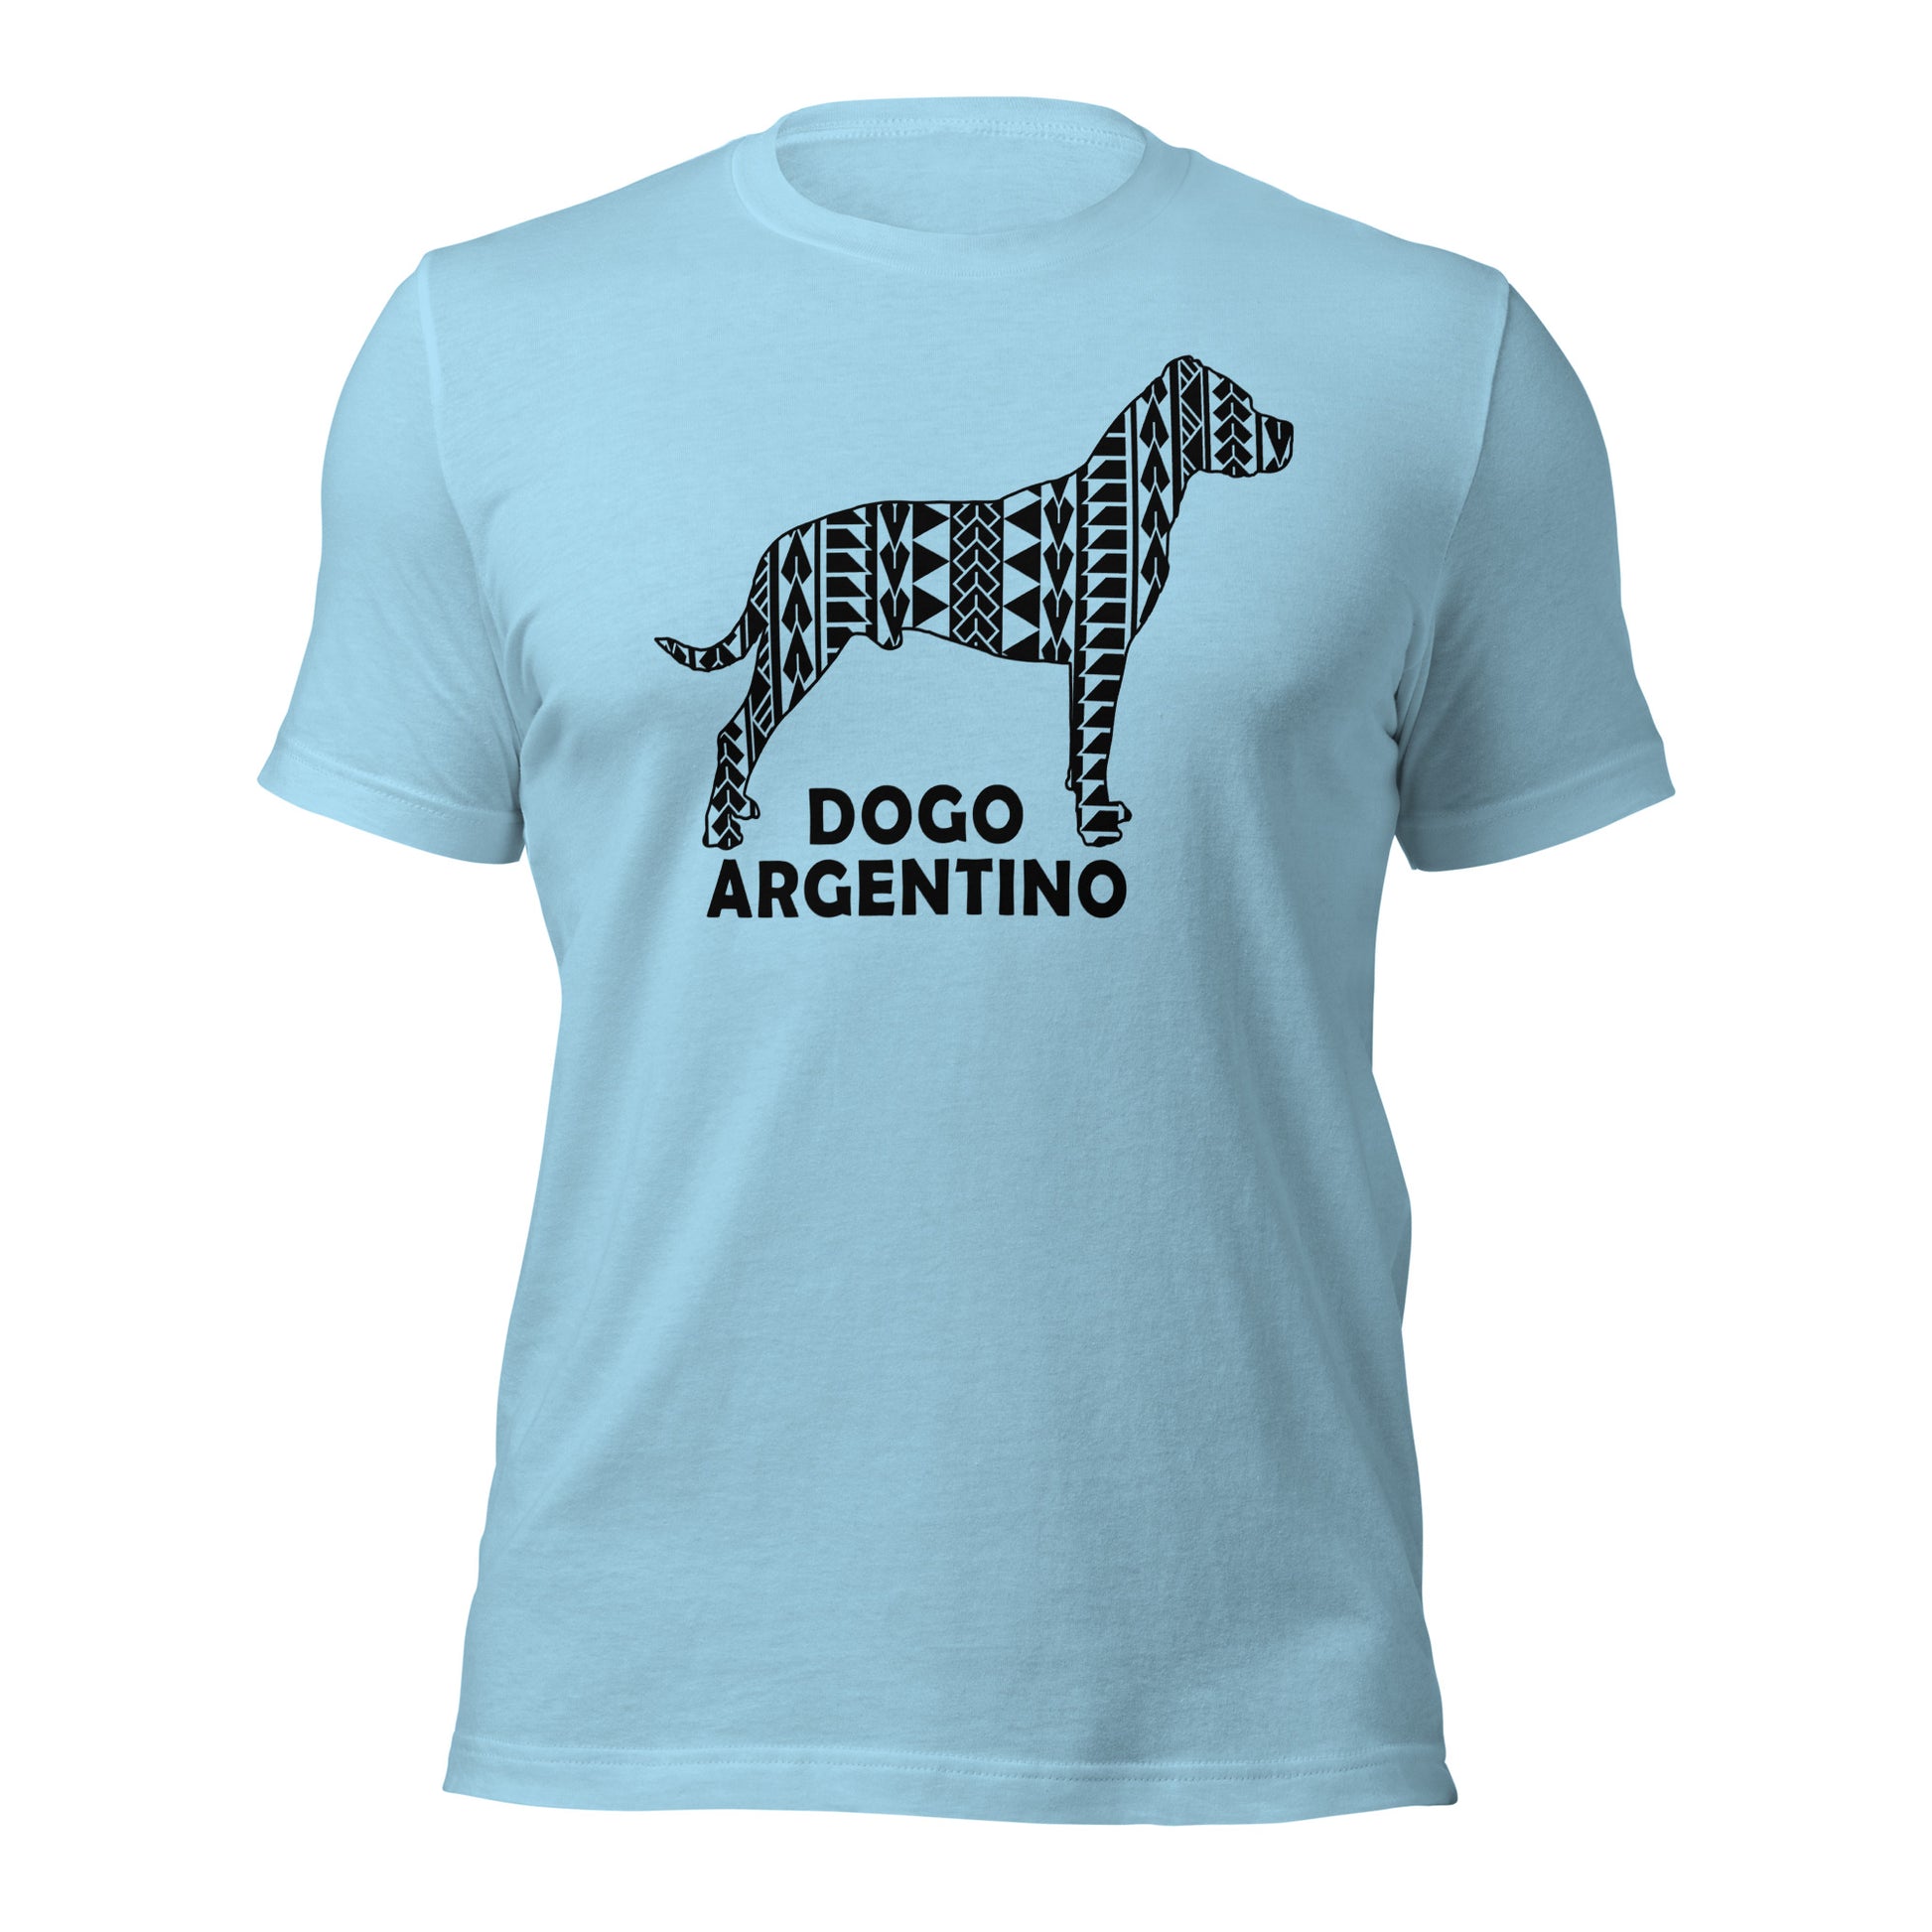 Dogo Argentino Polynesian t-shirt blue by Dog Artistry.